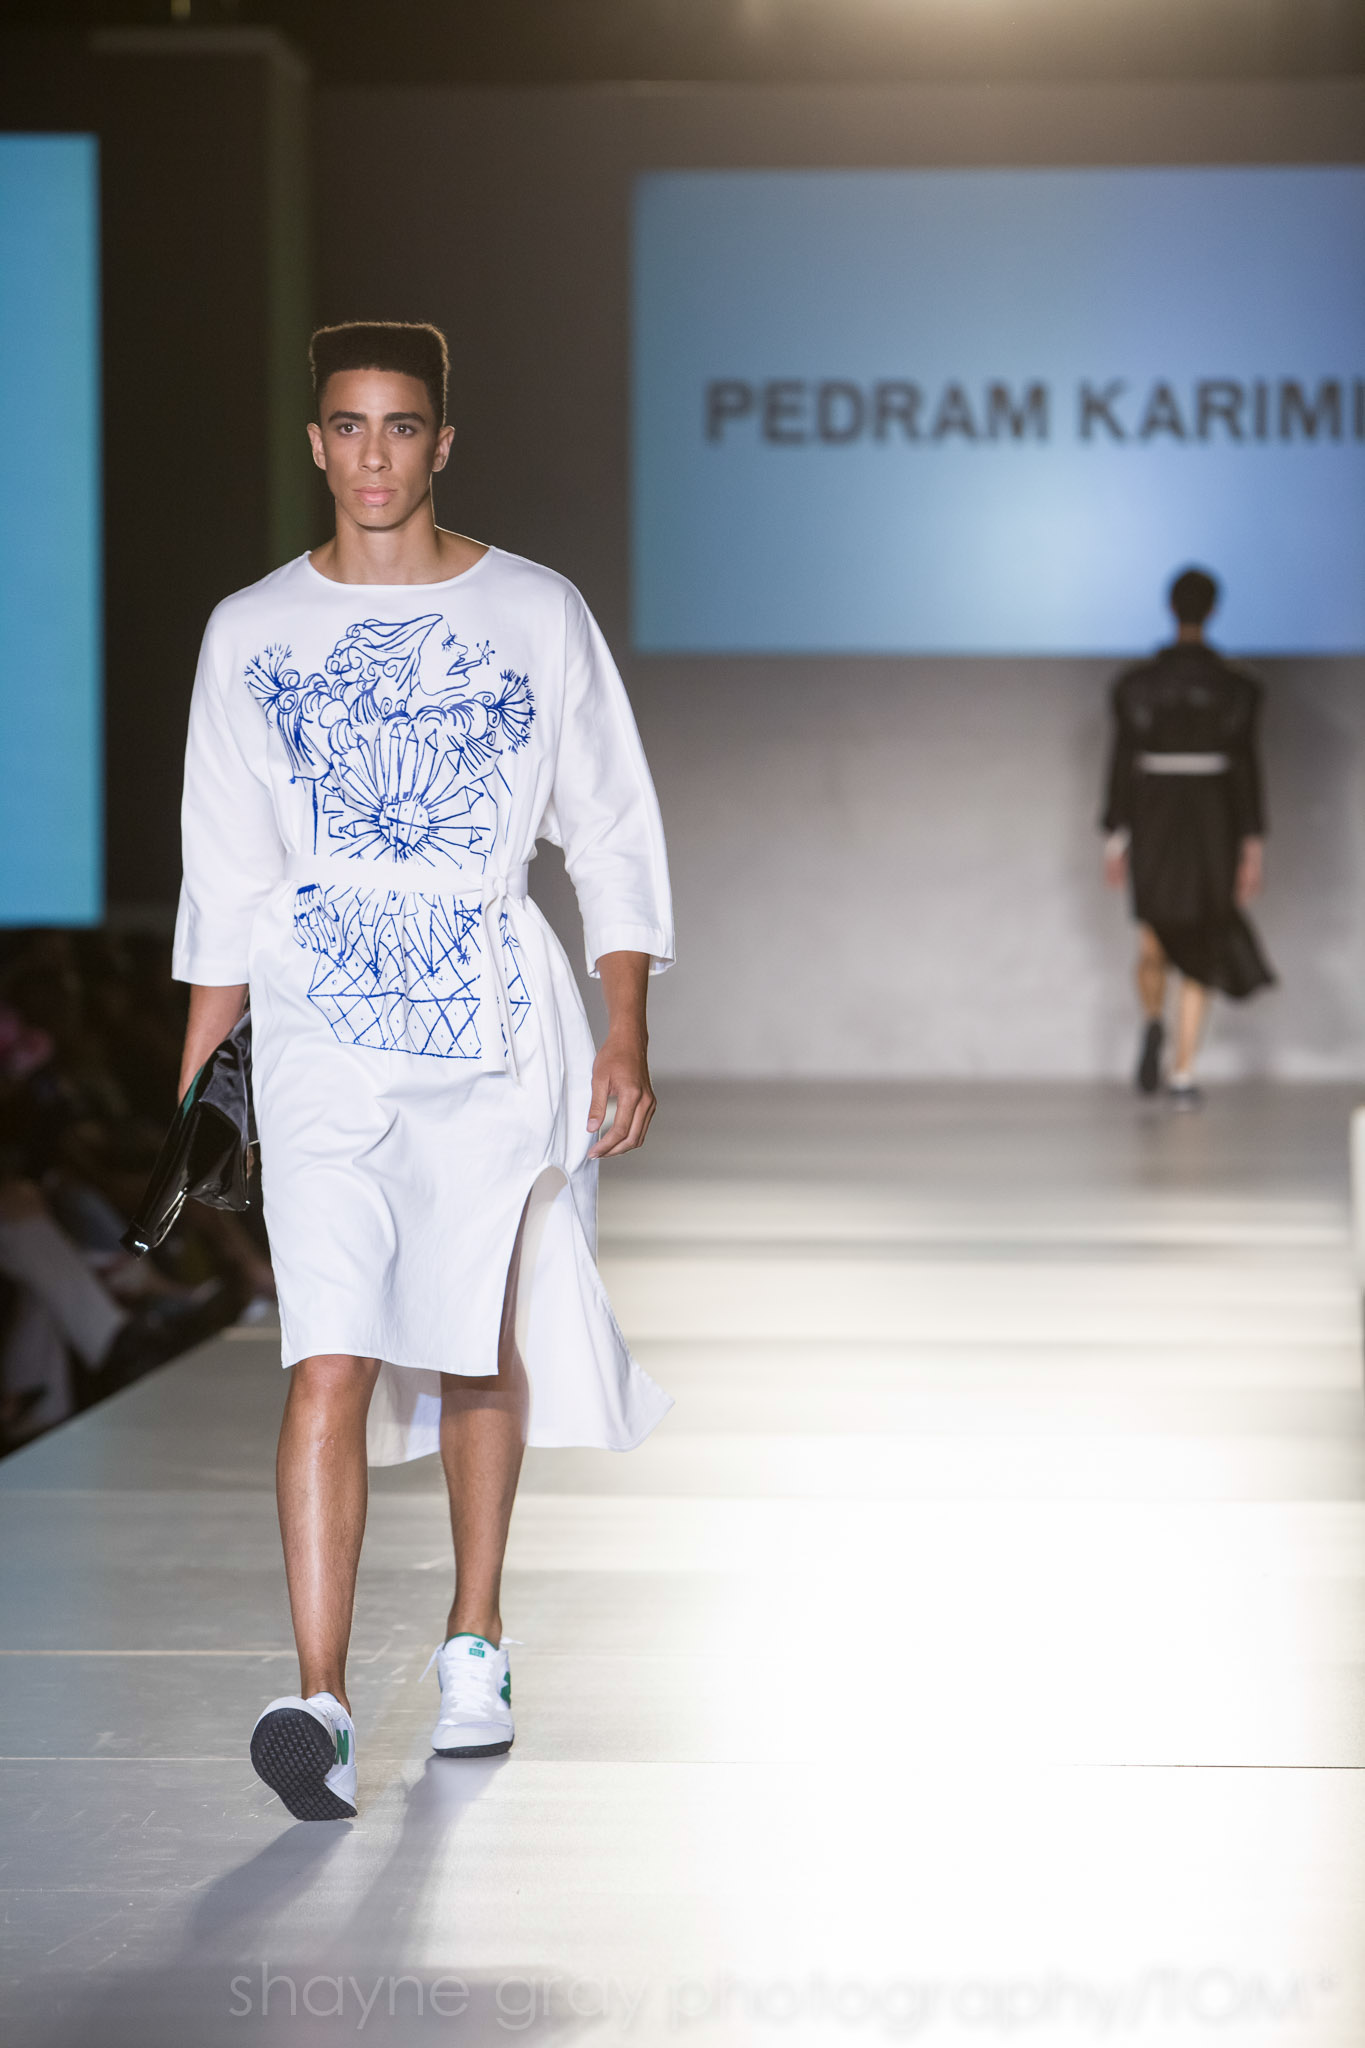 Shayne-Gray-Toronto-men's-fashion_week-TOM-Pedram-Karimi-8857.jpg